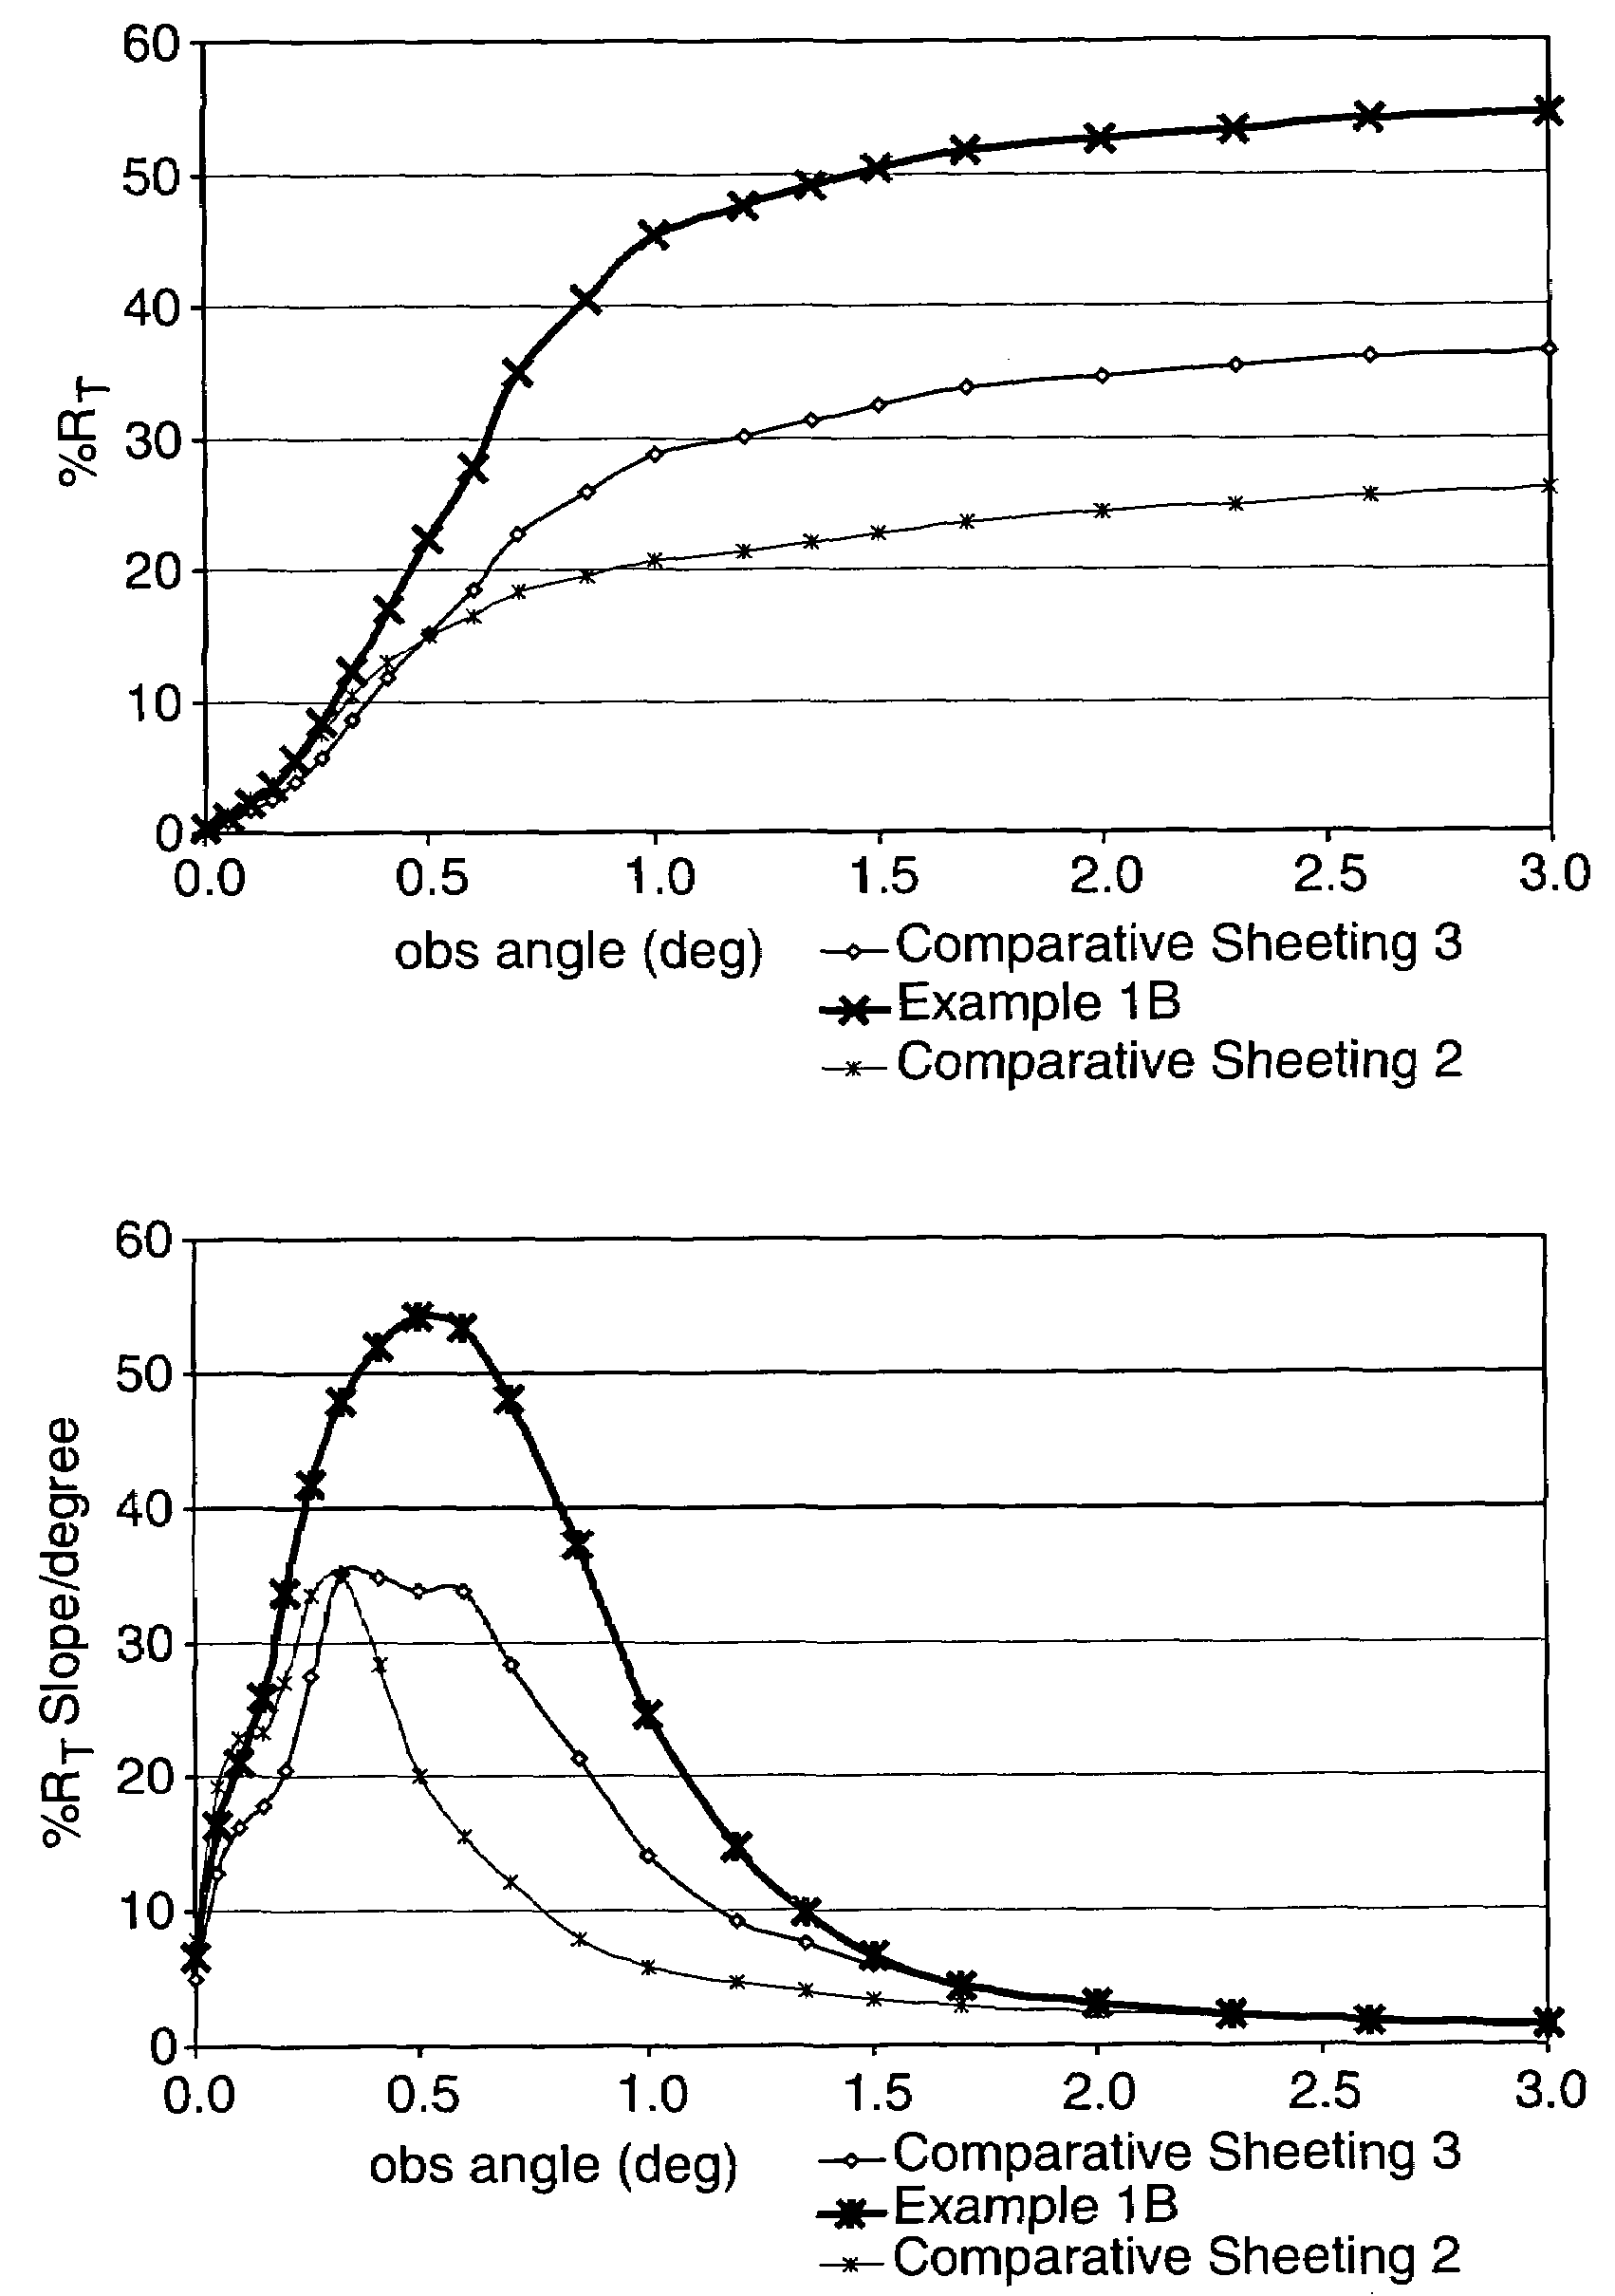 Retroreflective sheeting having high retroreflectance at low observation angles